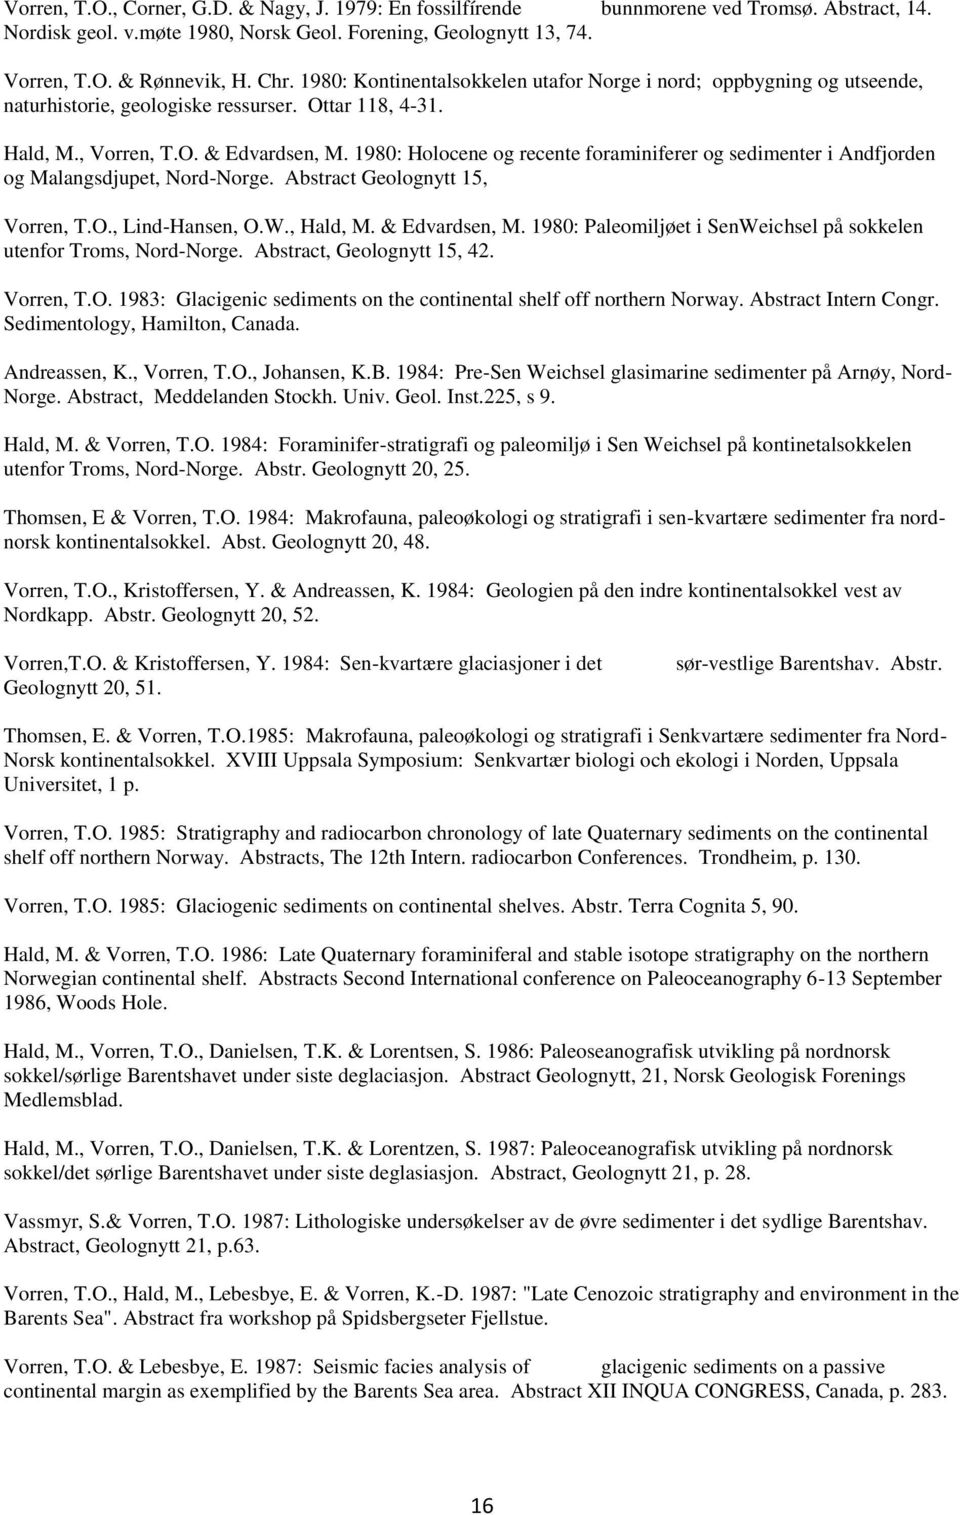 1980: Holocene og recente foraminiferer og sedimenter i Andfjorden og Malangsdjupet, Nord-Norge. Abstract Geolognytt 15, Vorren, T.O., Lind-Hansen, O.W., Hald, M. & Edvardsen, M.